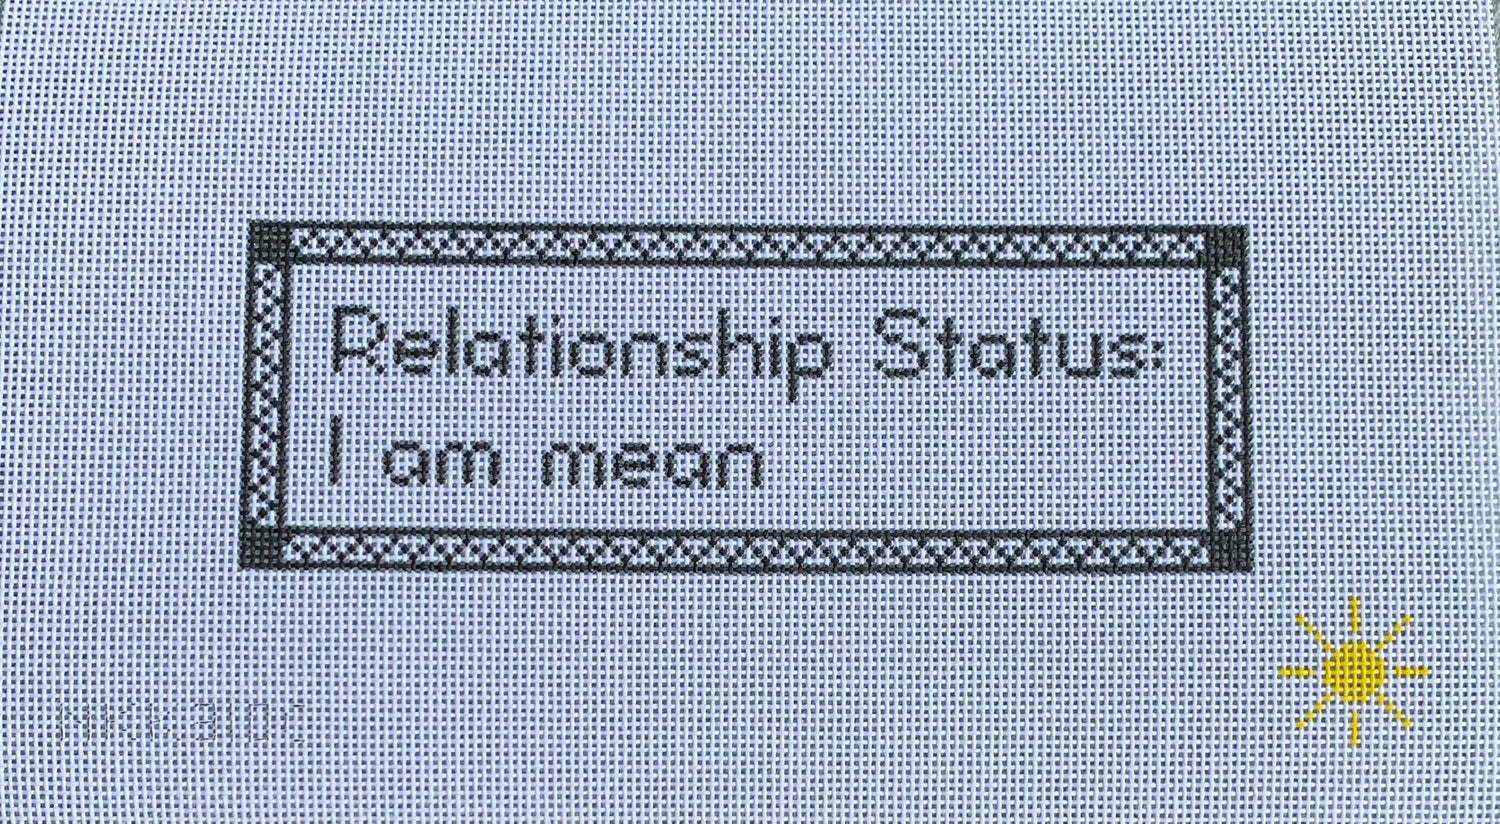 Relationship Status - Mean